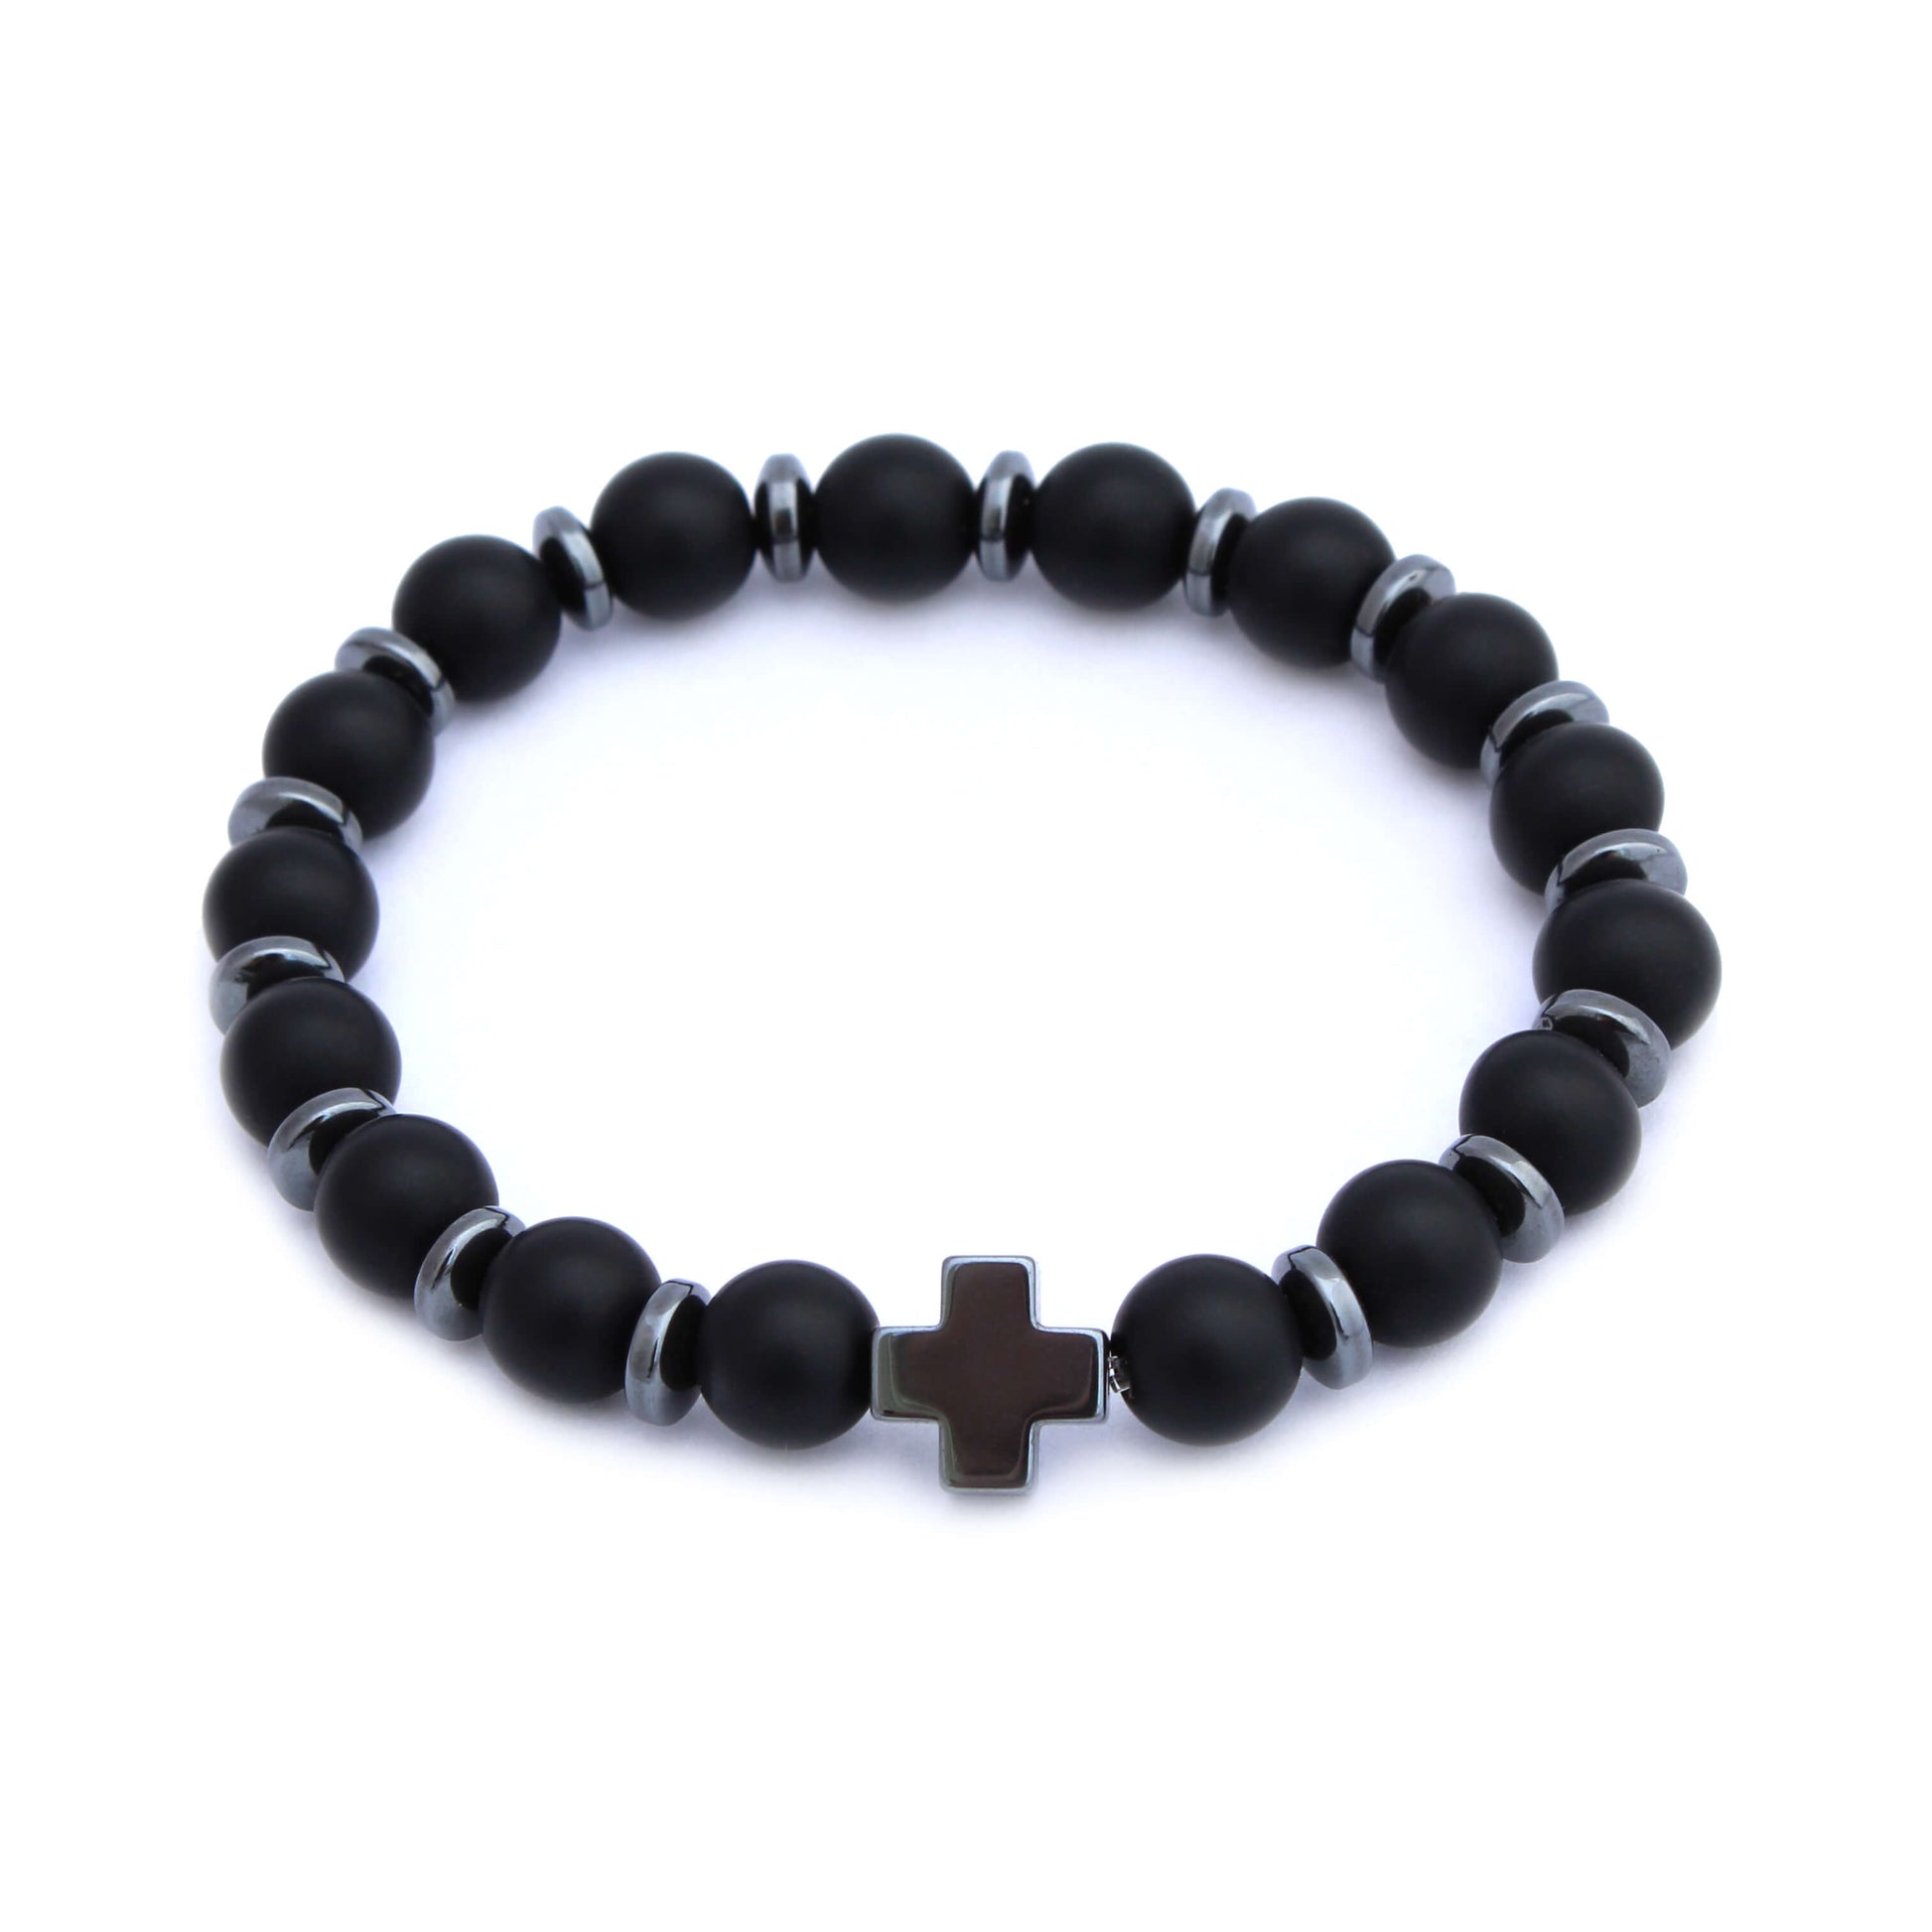 Bead Cross Bracelet - Black